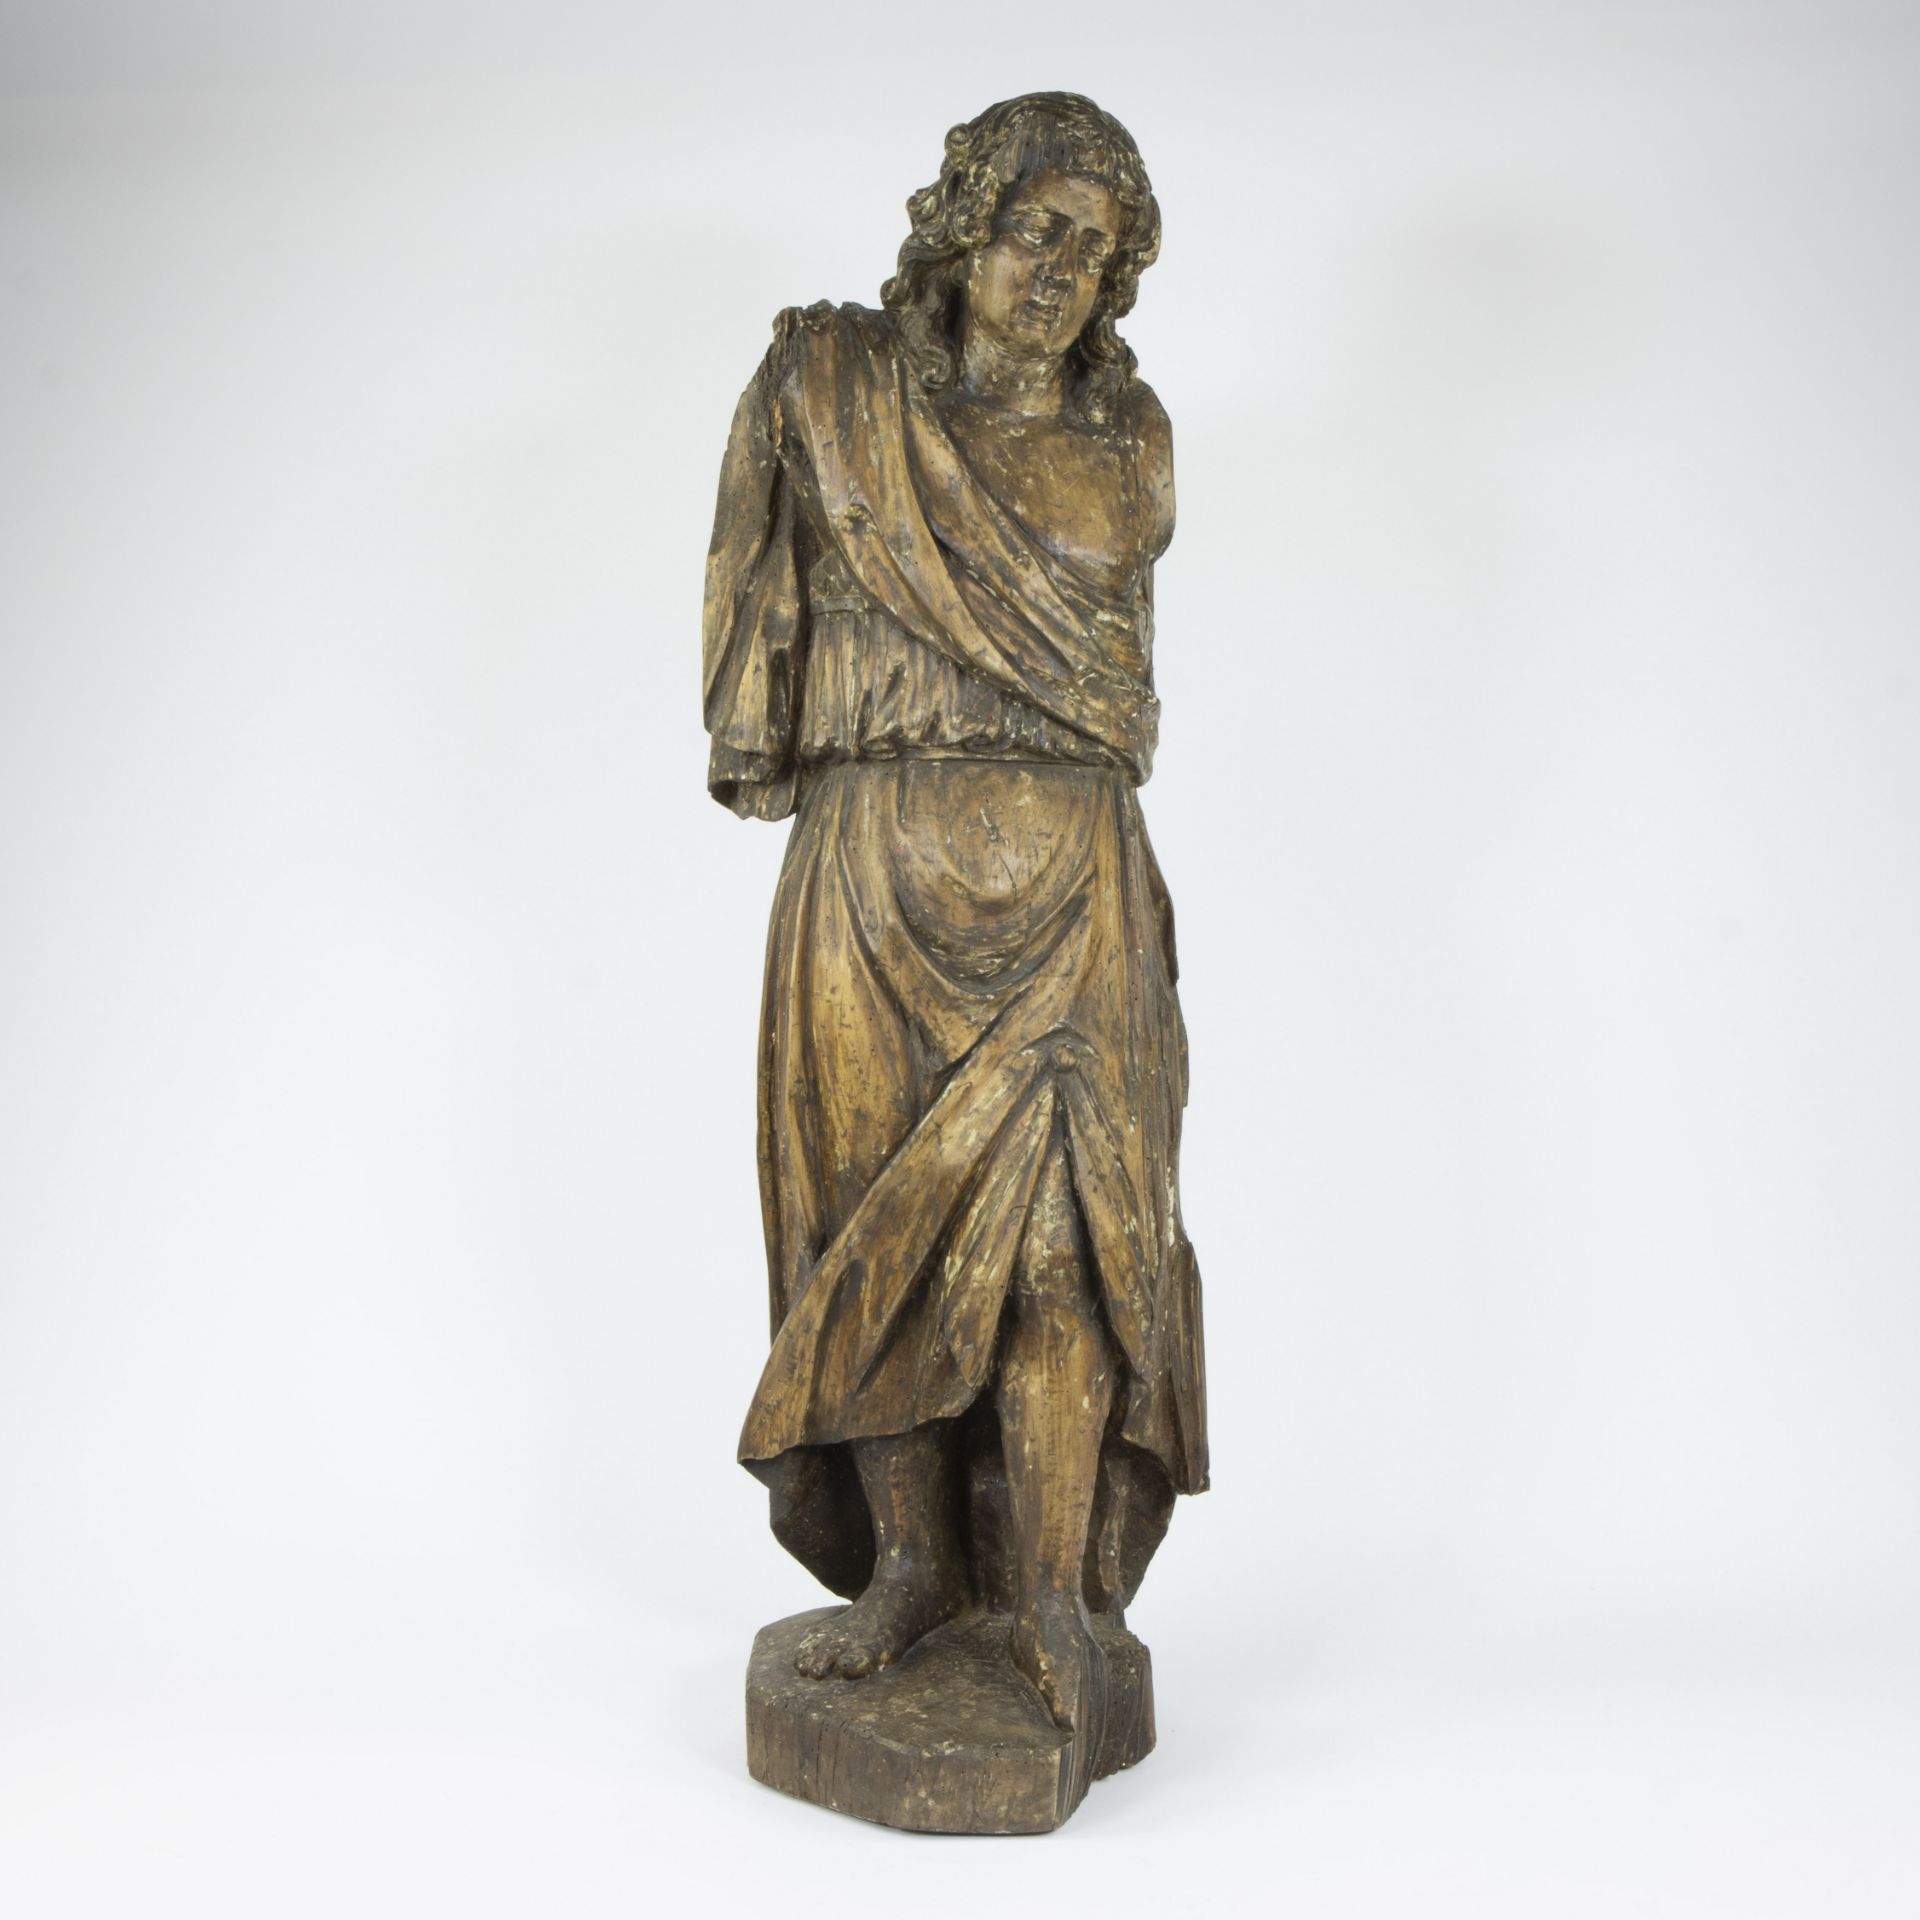 18th century German wooden saint statue